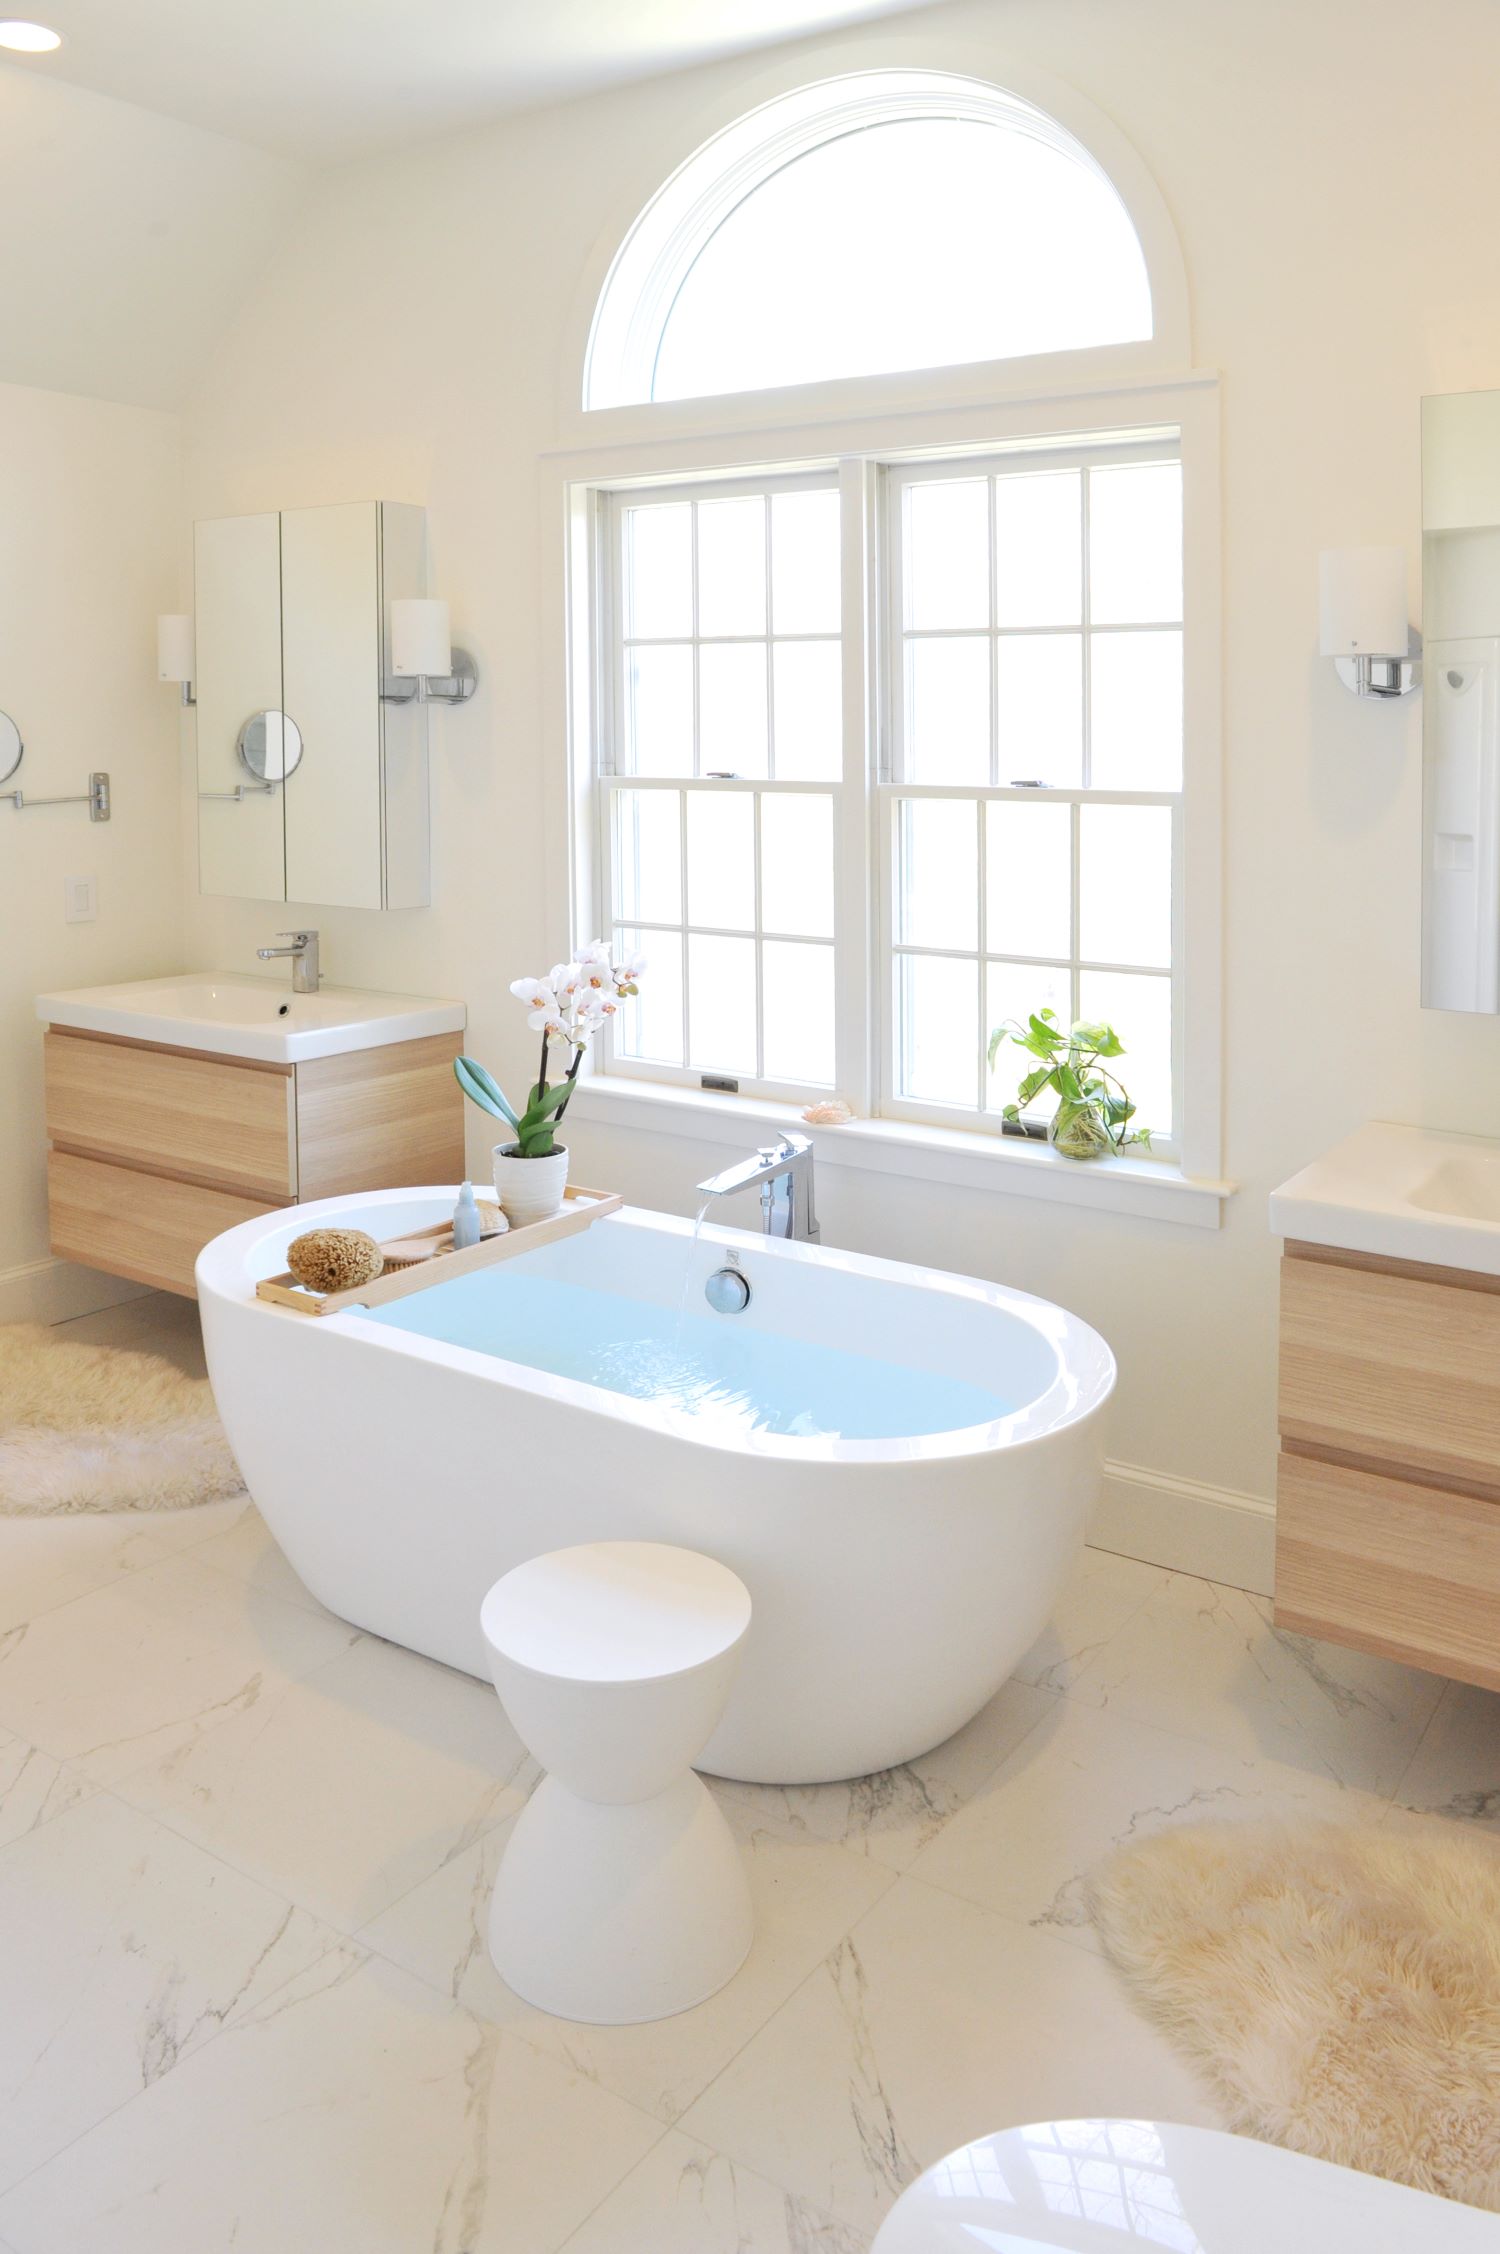 Luxury master bathroom renovation with standalone bathtub